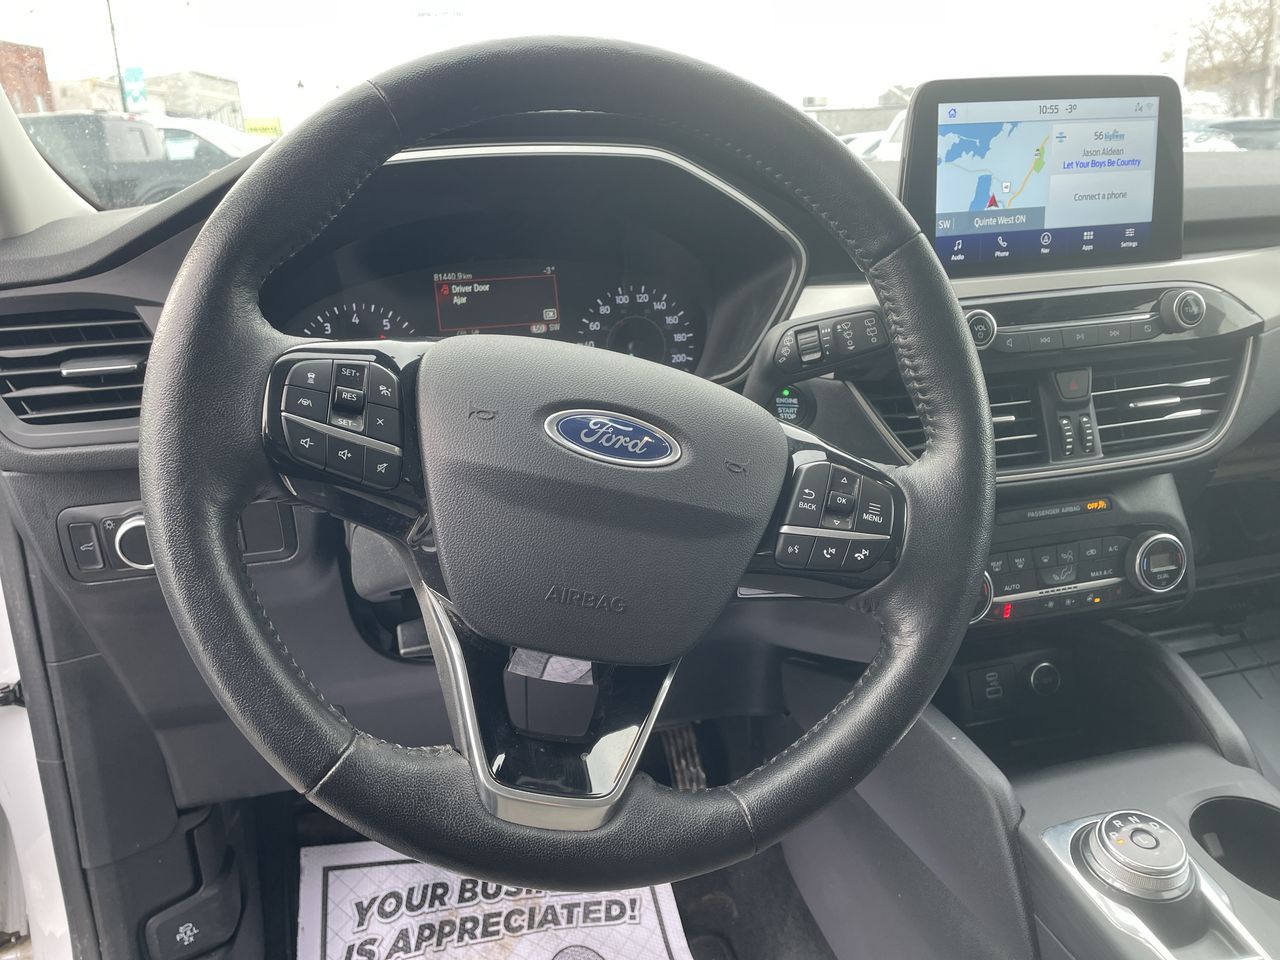 2021 Ford Escape - 21570A Full Image 14